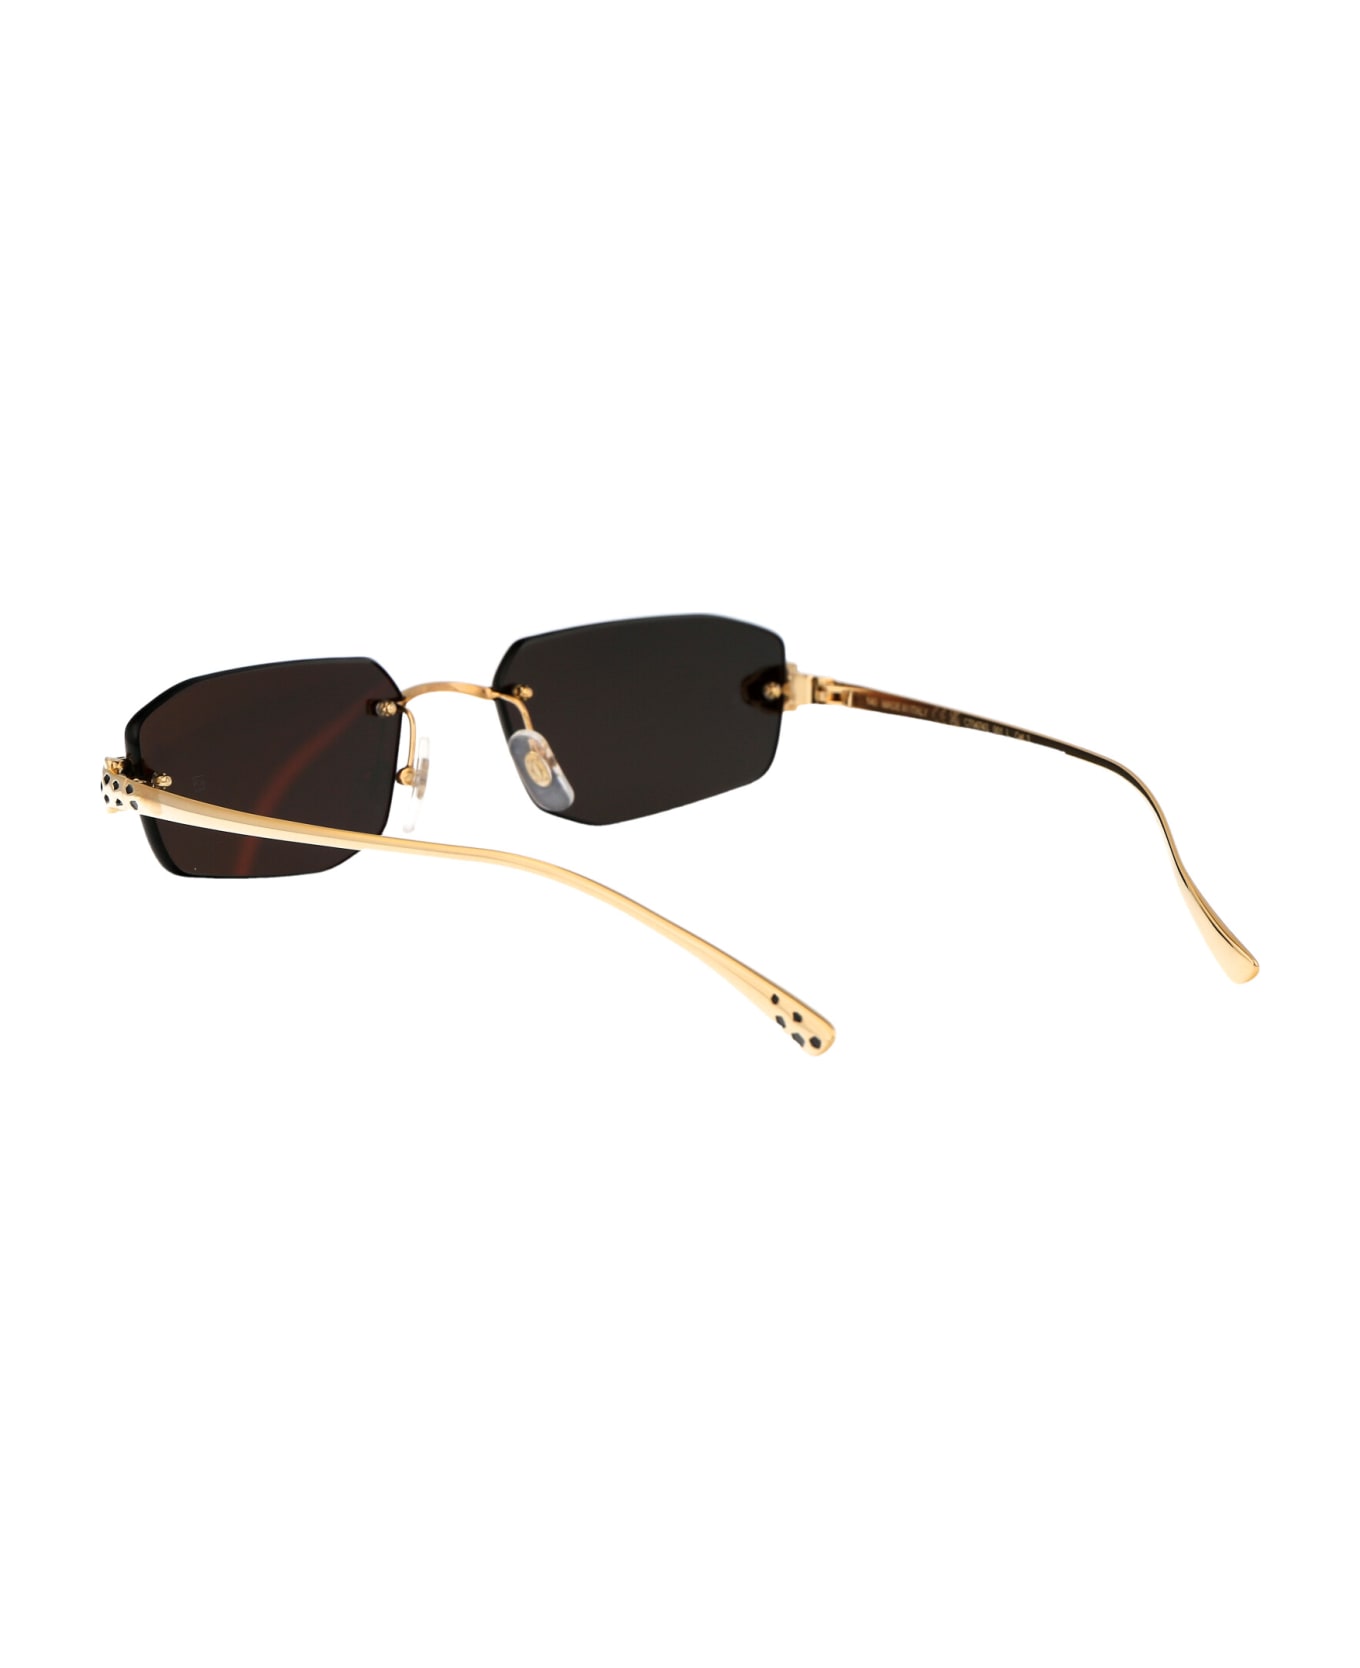 Cartier Eyewear Ct0474s Sunglasses - 001 GOLD GOLD GREY